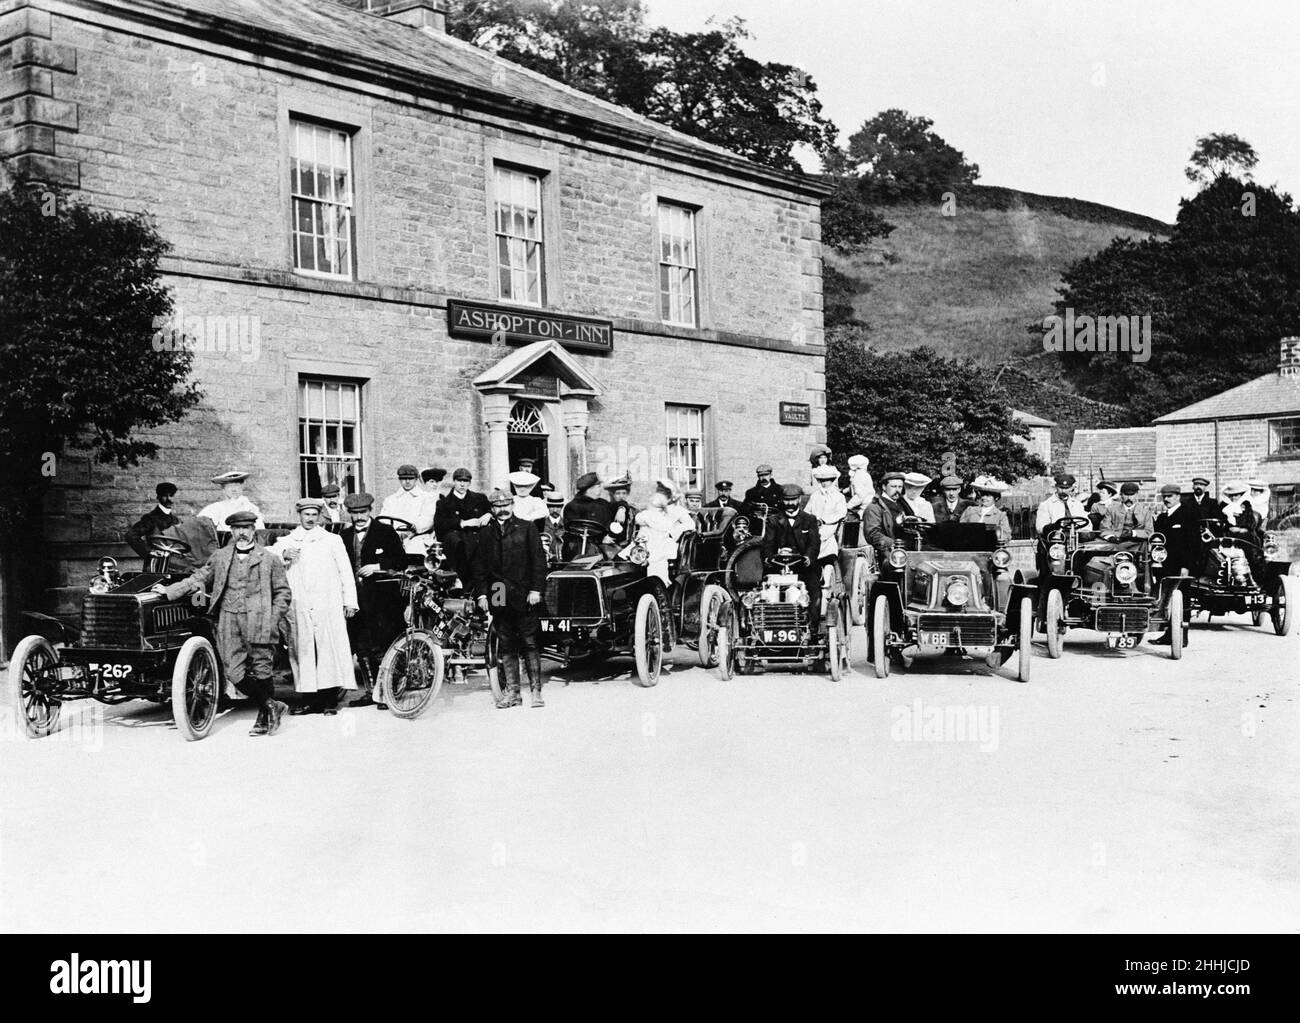 Sheffield Automobile Club outside the Ashopton Inn, Derwent, Derbyshire in 1904, now submerged under the Ladybower Reservoir. Stock Photo